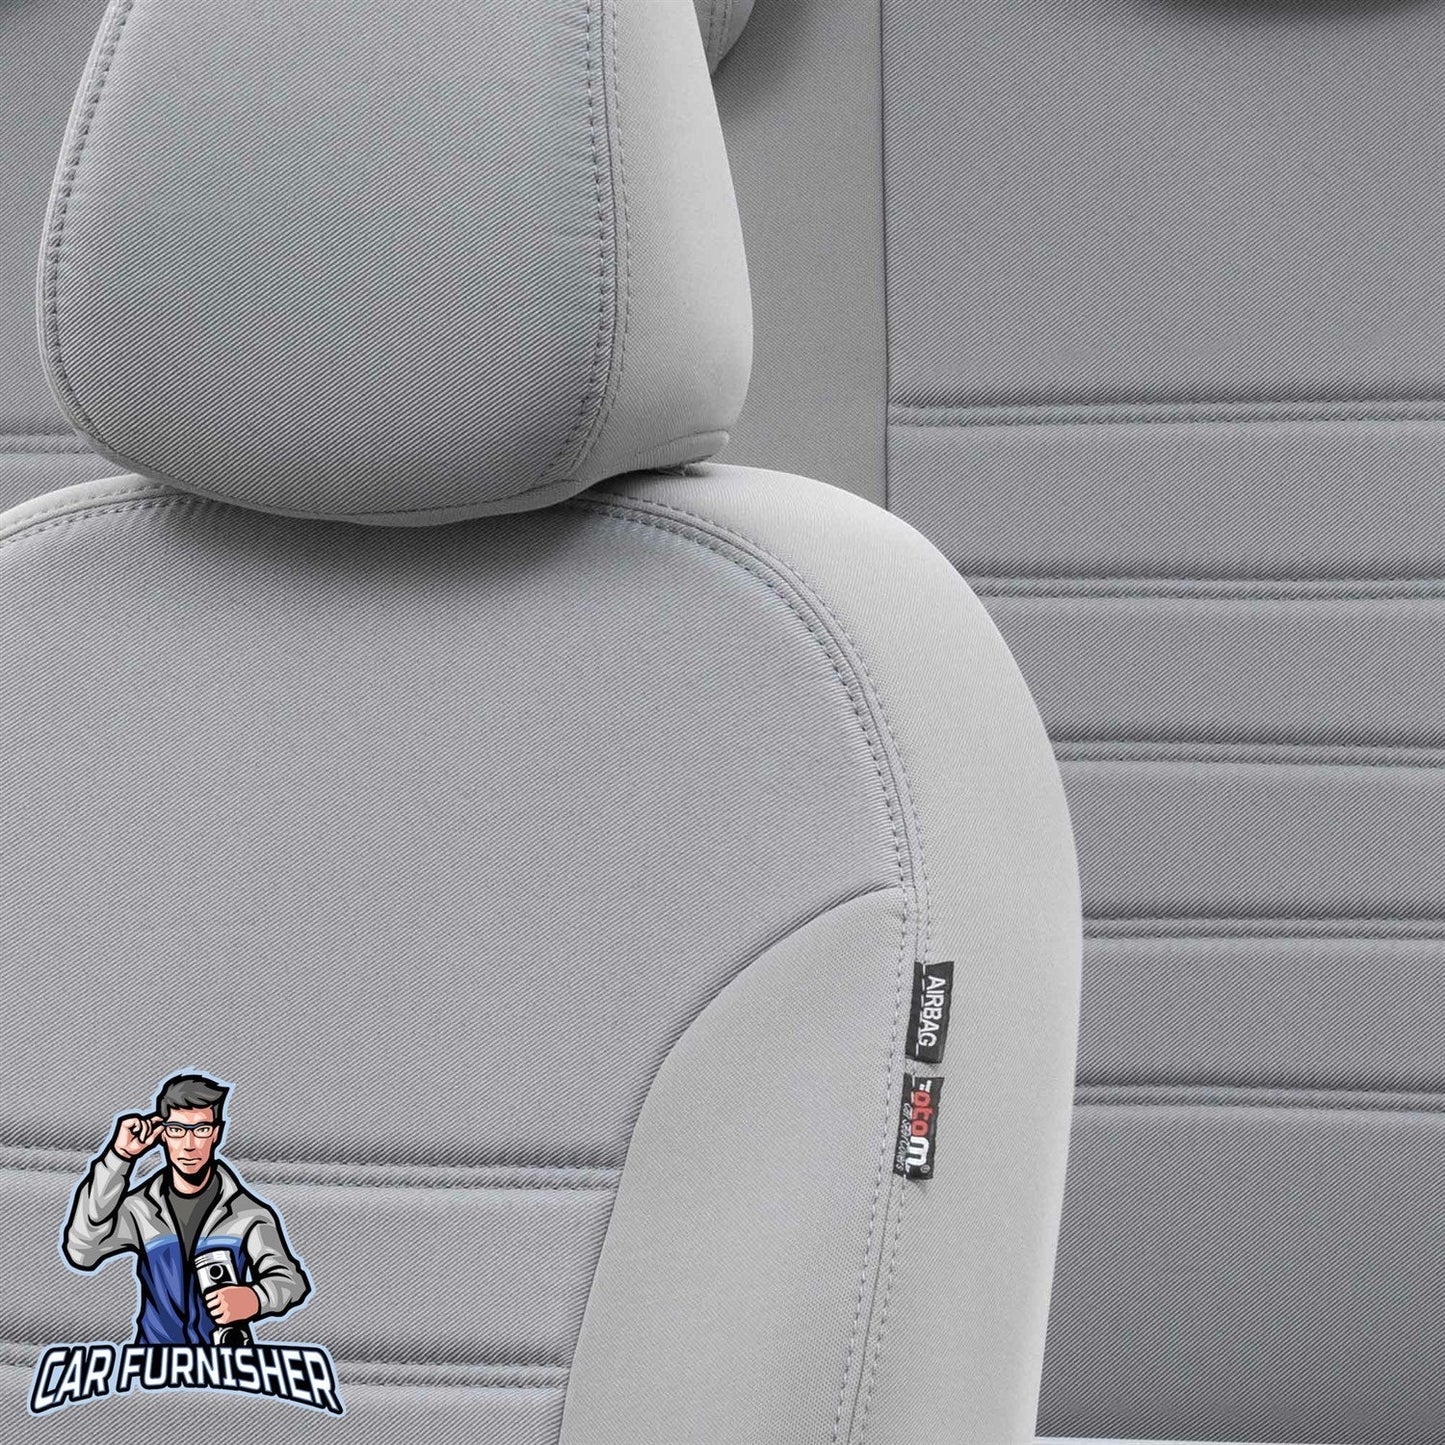 Fiat Marea Seat Covers Original Jacquard Design Light Gray Jacquard Fabric